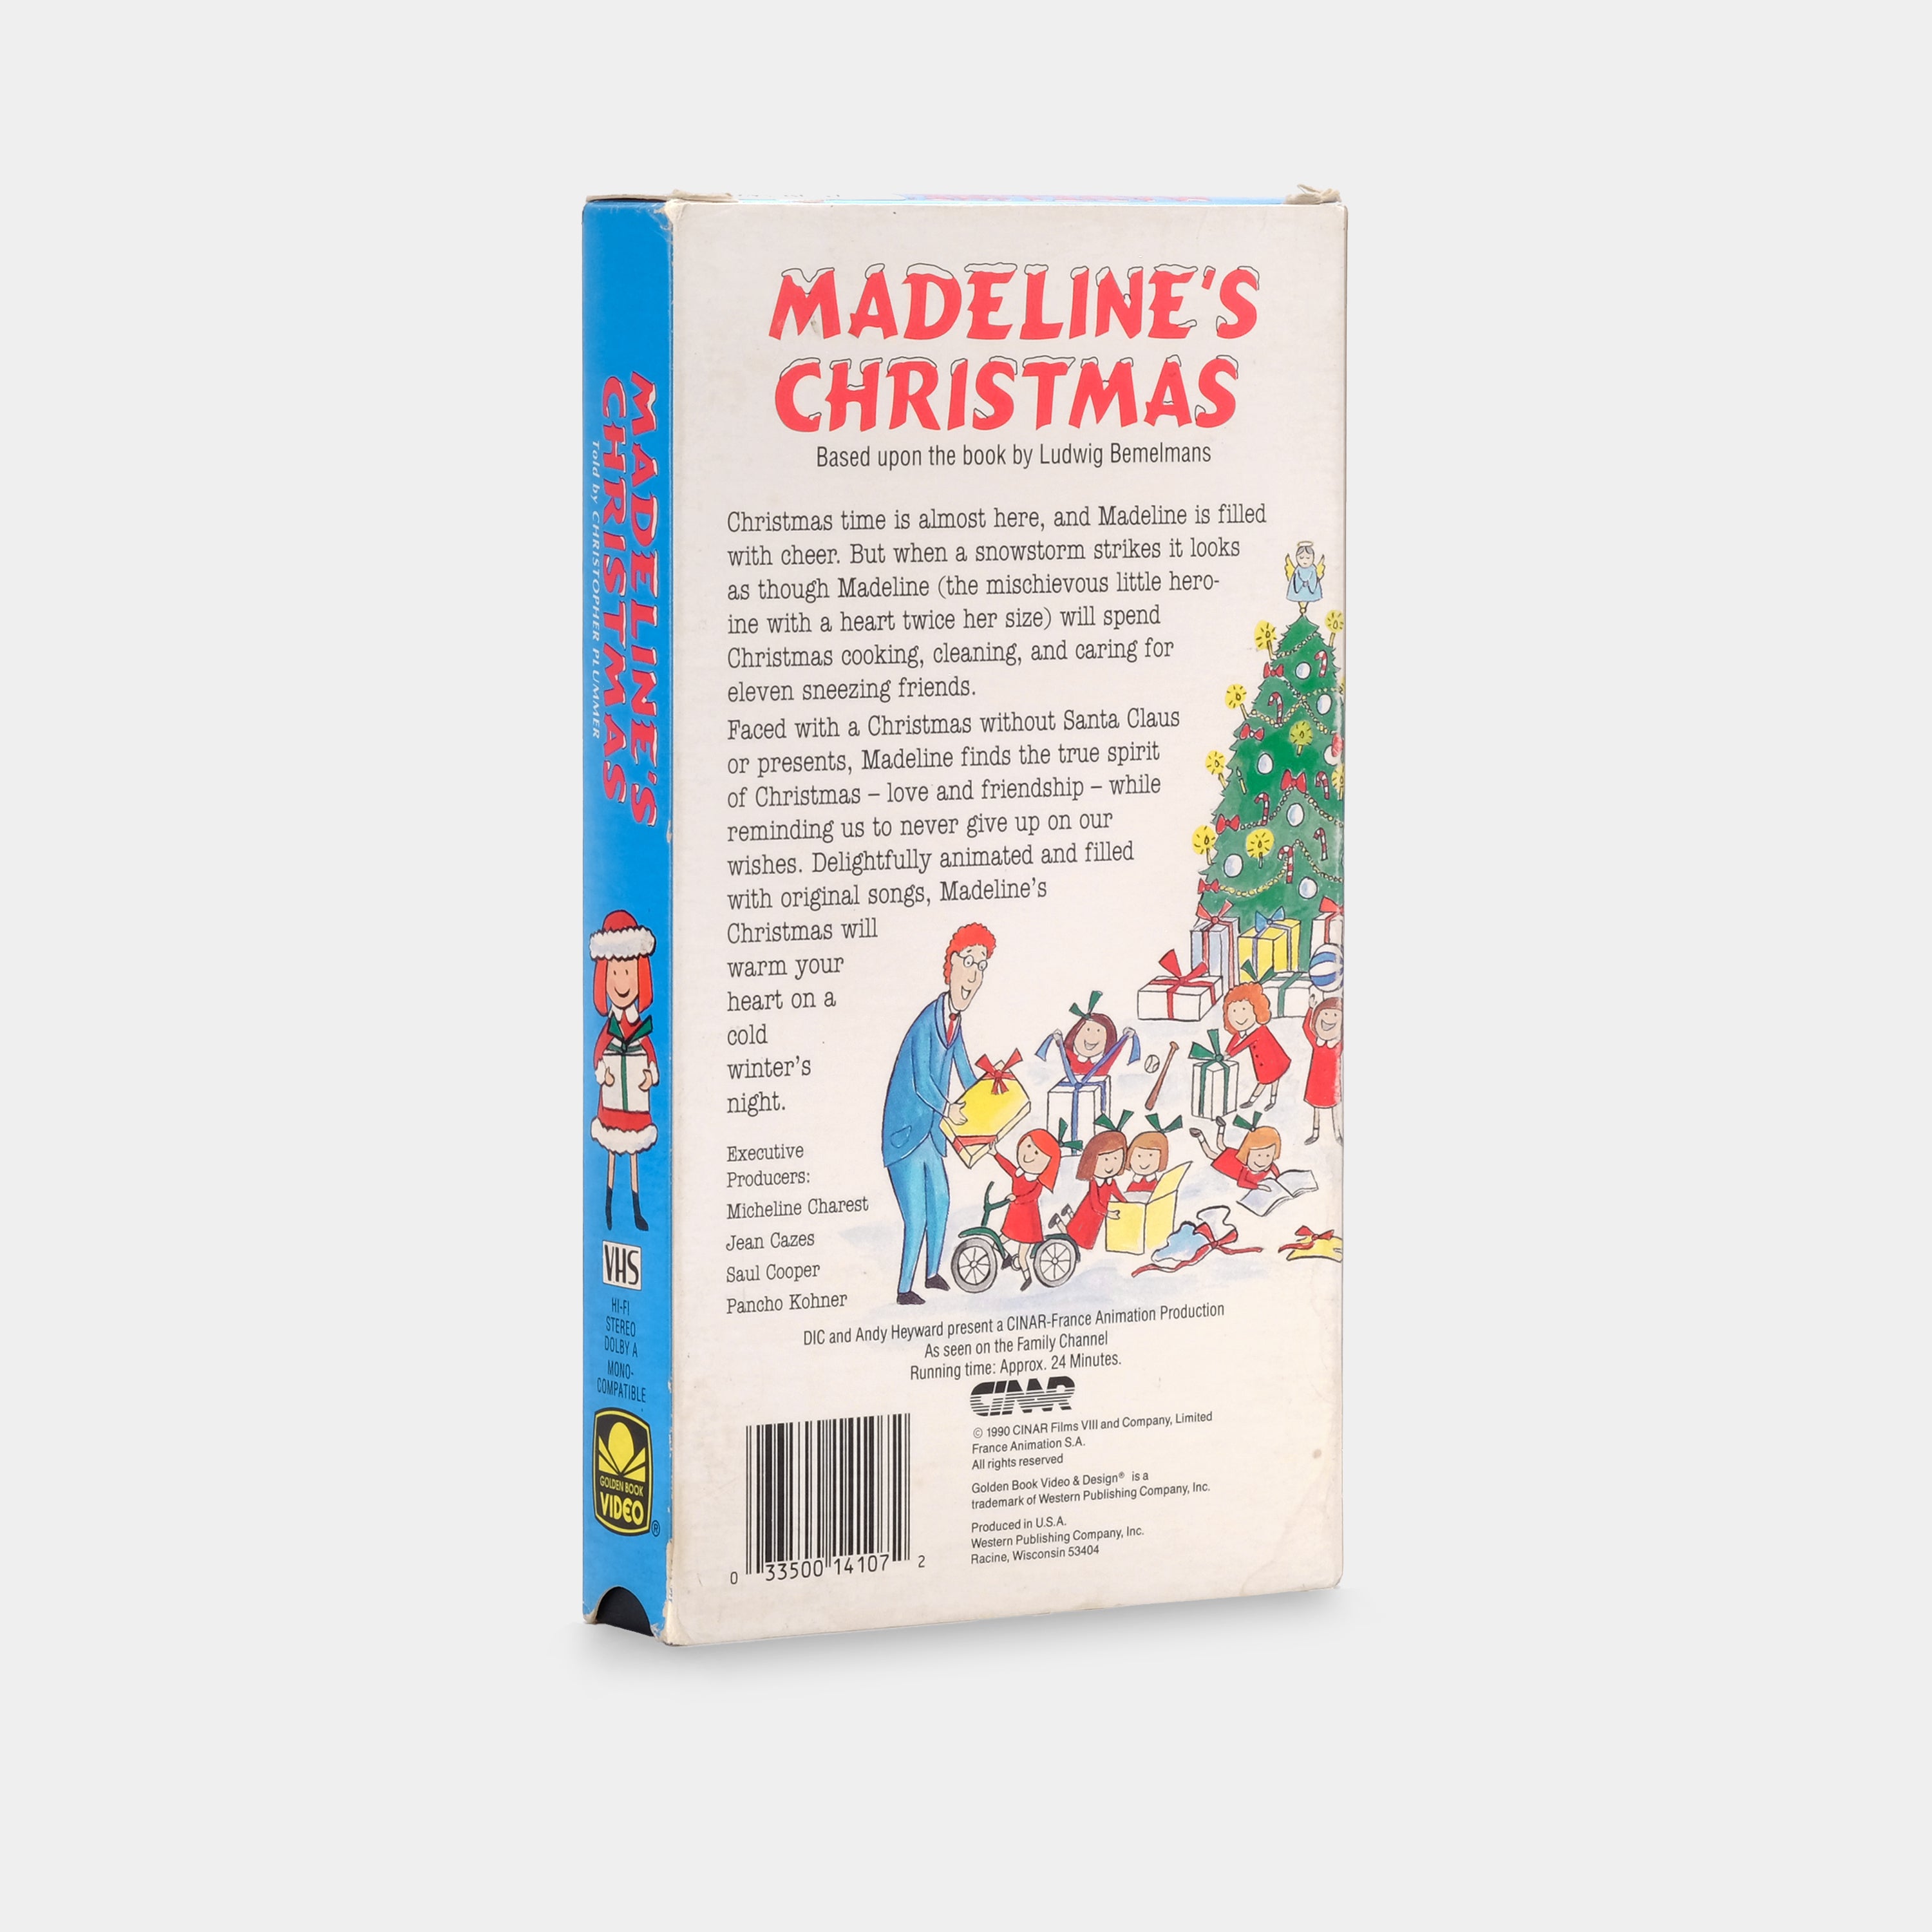 Madeline's Christmas VHS Tape